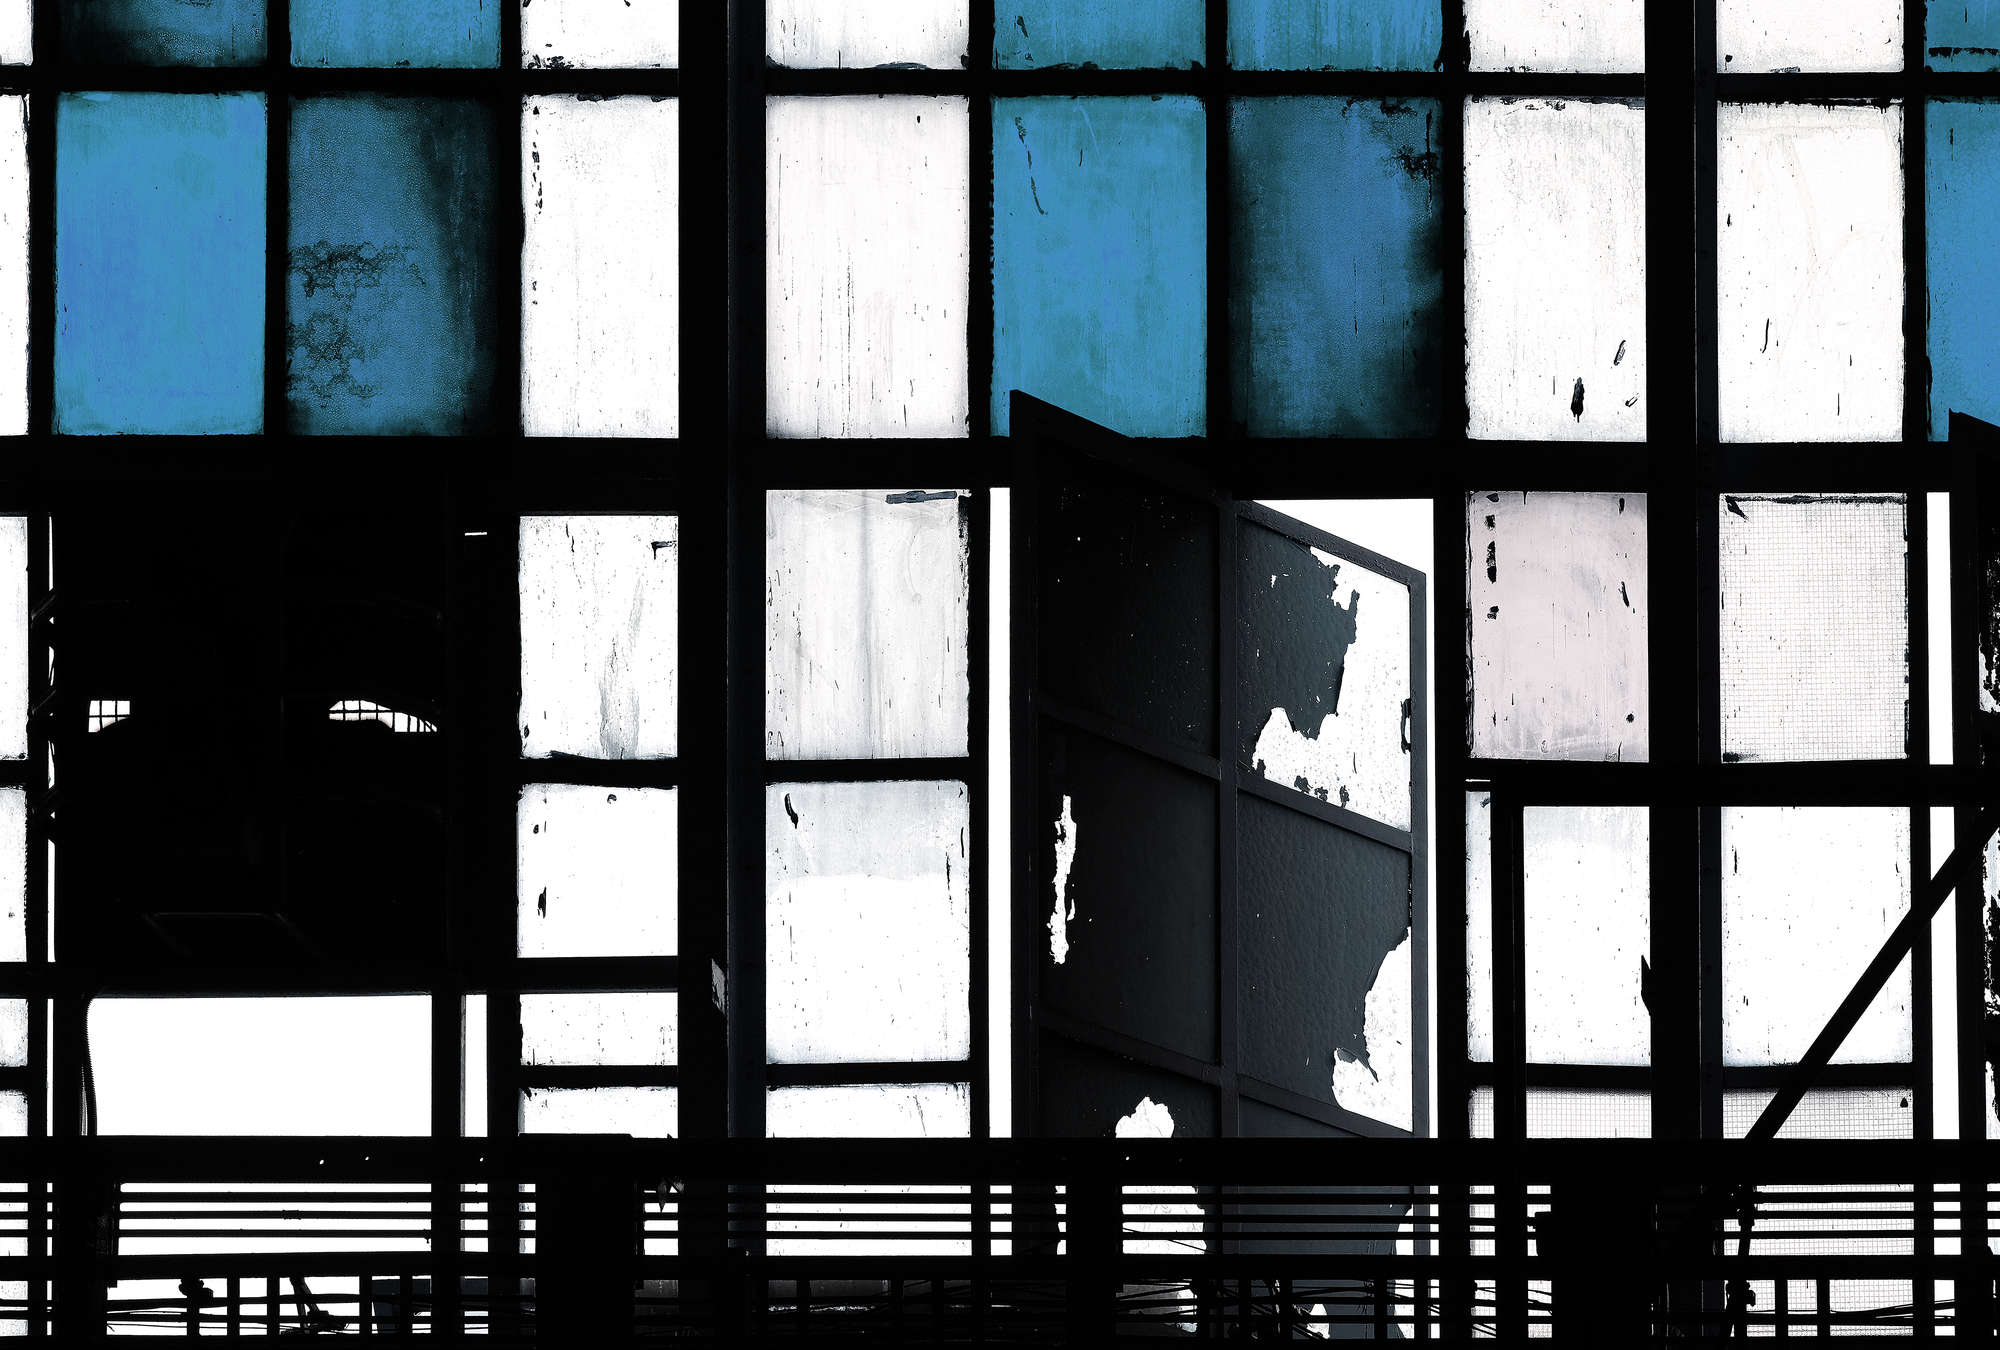             Bronx 3 - Fototapete, Loft mit Buntglas-Fenstern – Blau, Schwarz | Perlmutt Glattvlies
        